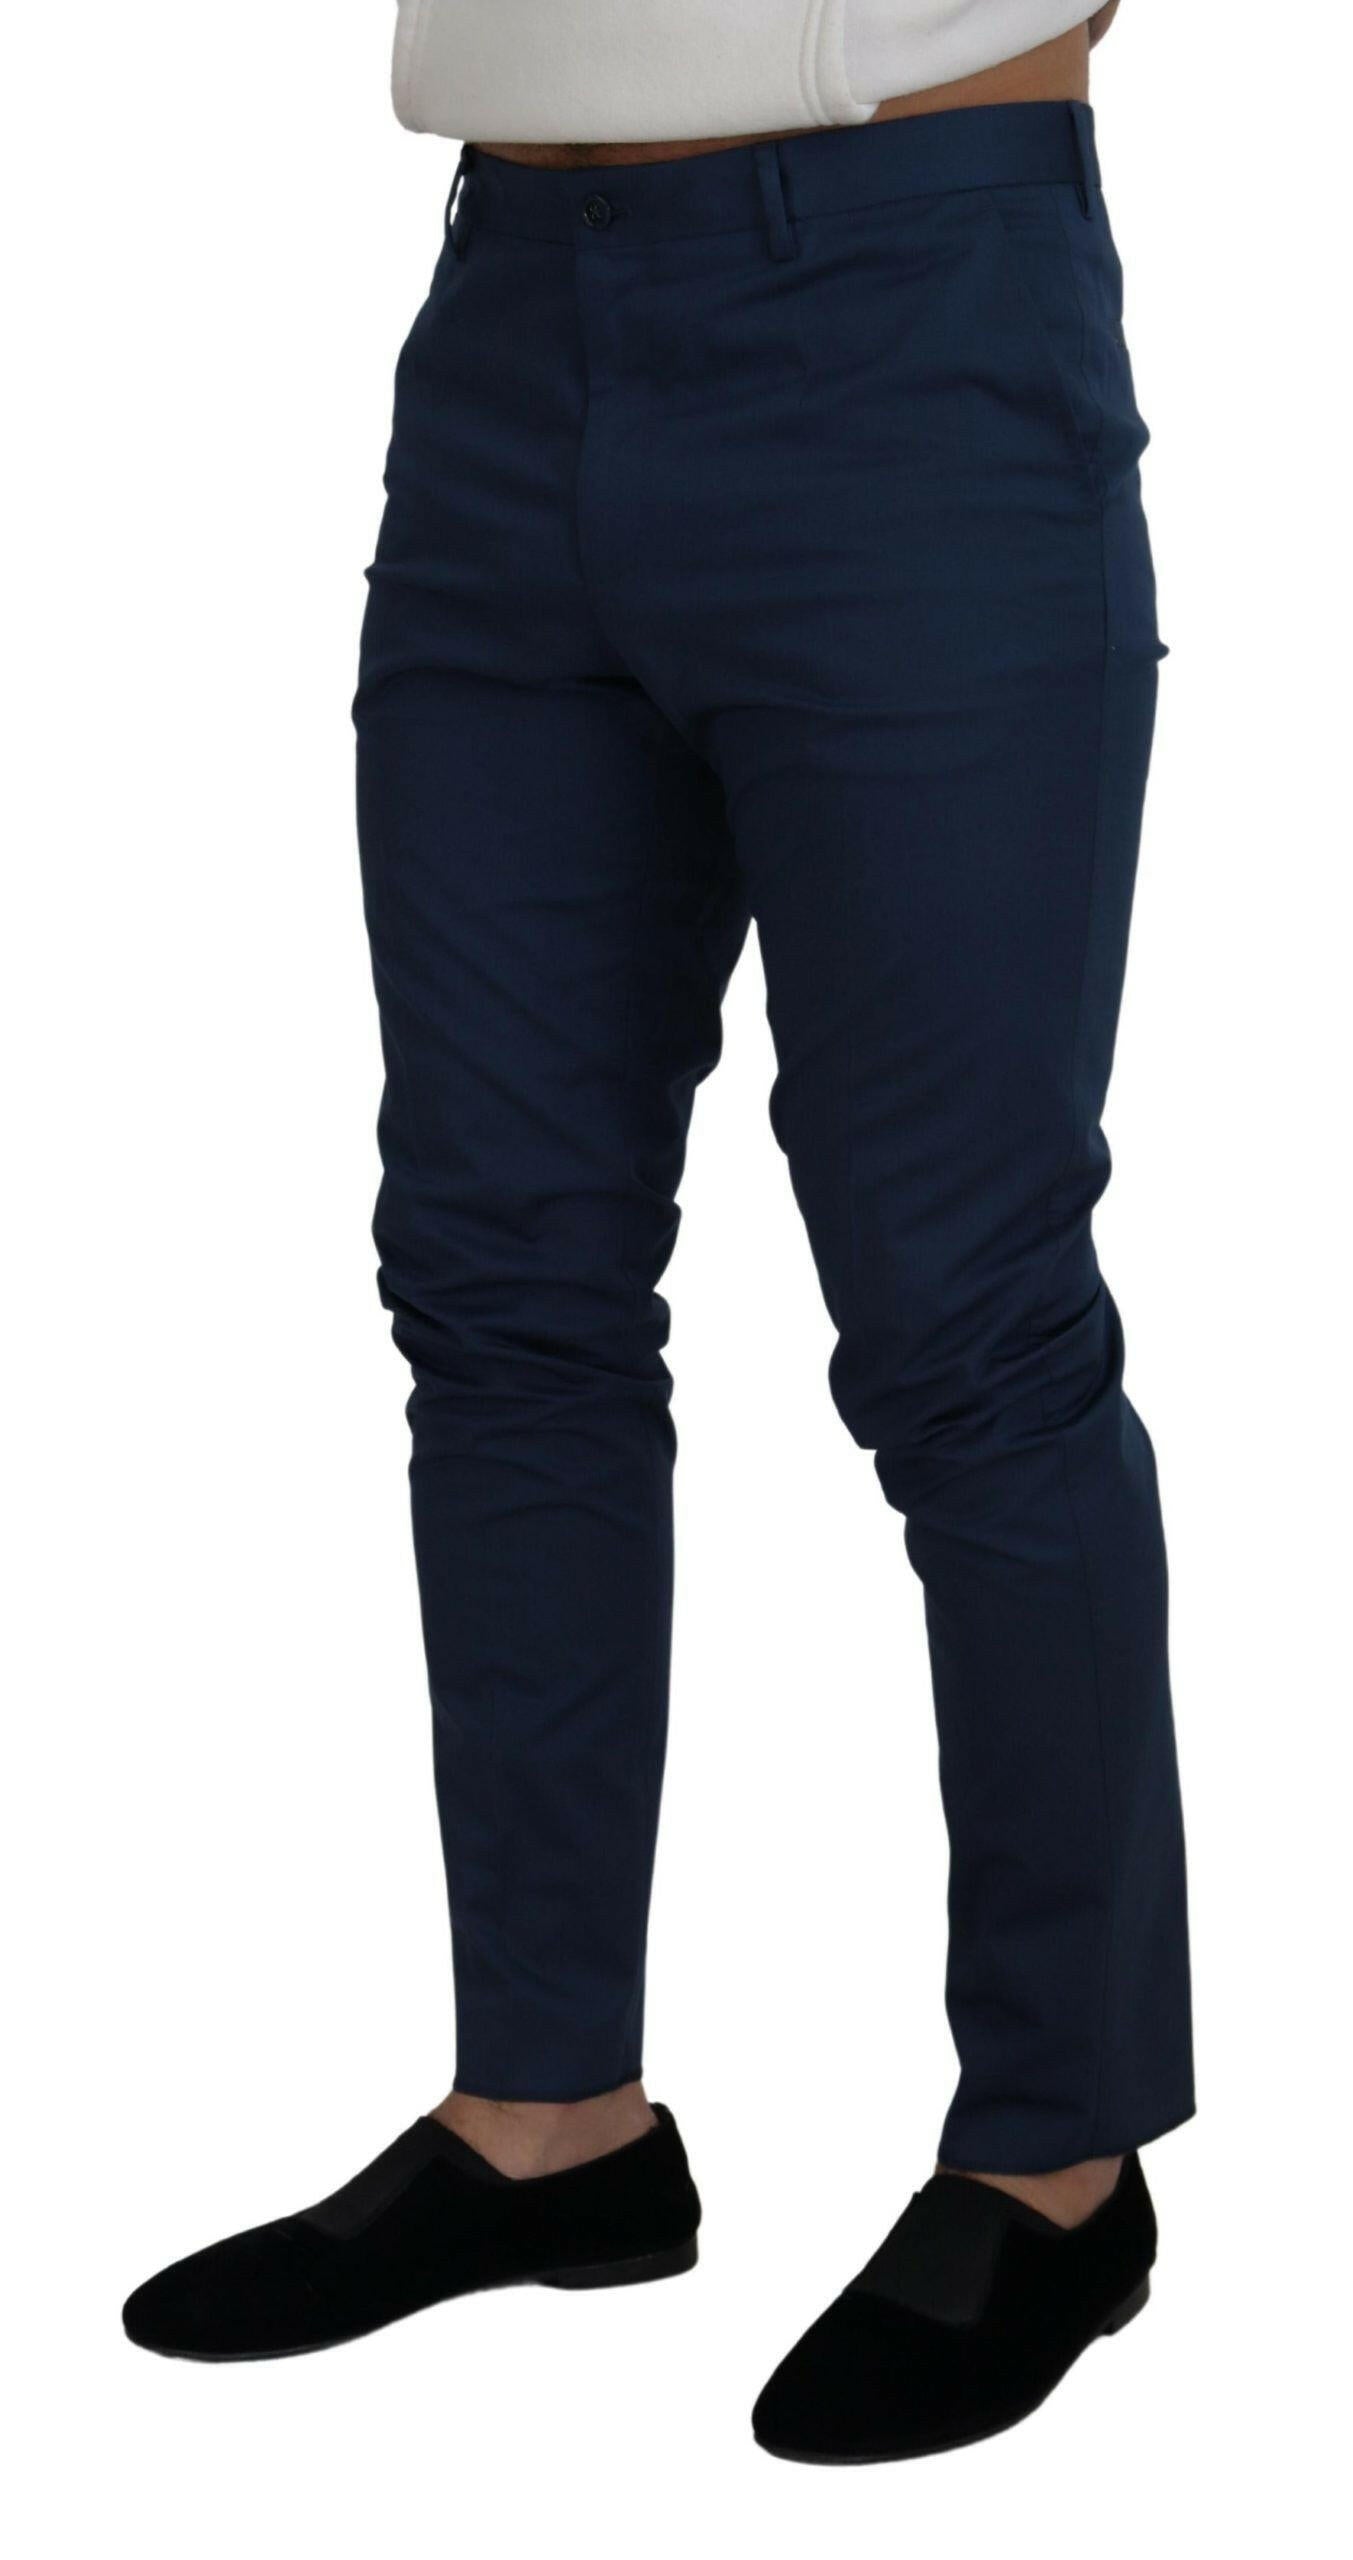 Dolce & Gabbana Blue Stretch Cotton Slim Trousers Chinos Pants - GENUINE AUTHENTIC BRAND LLC  